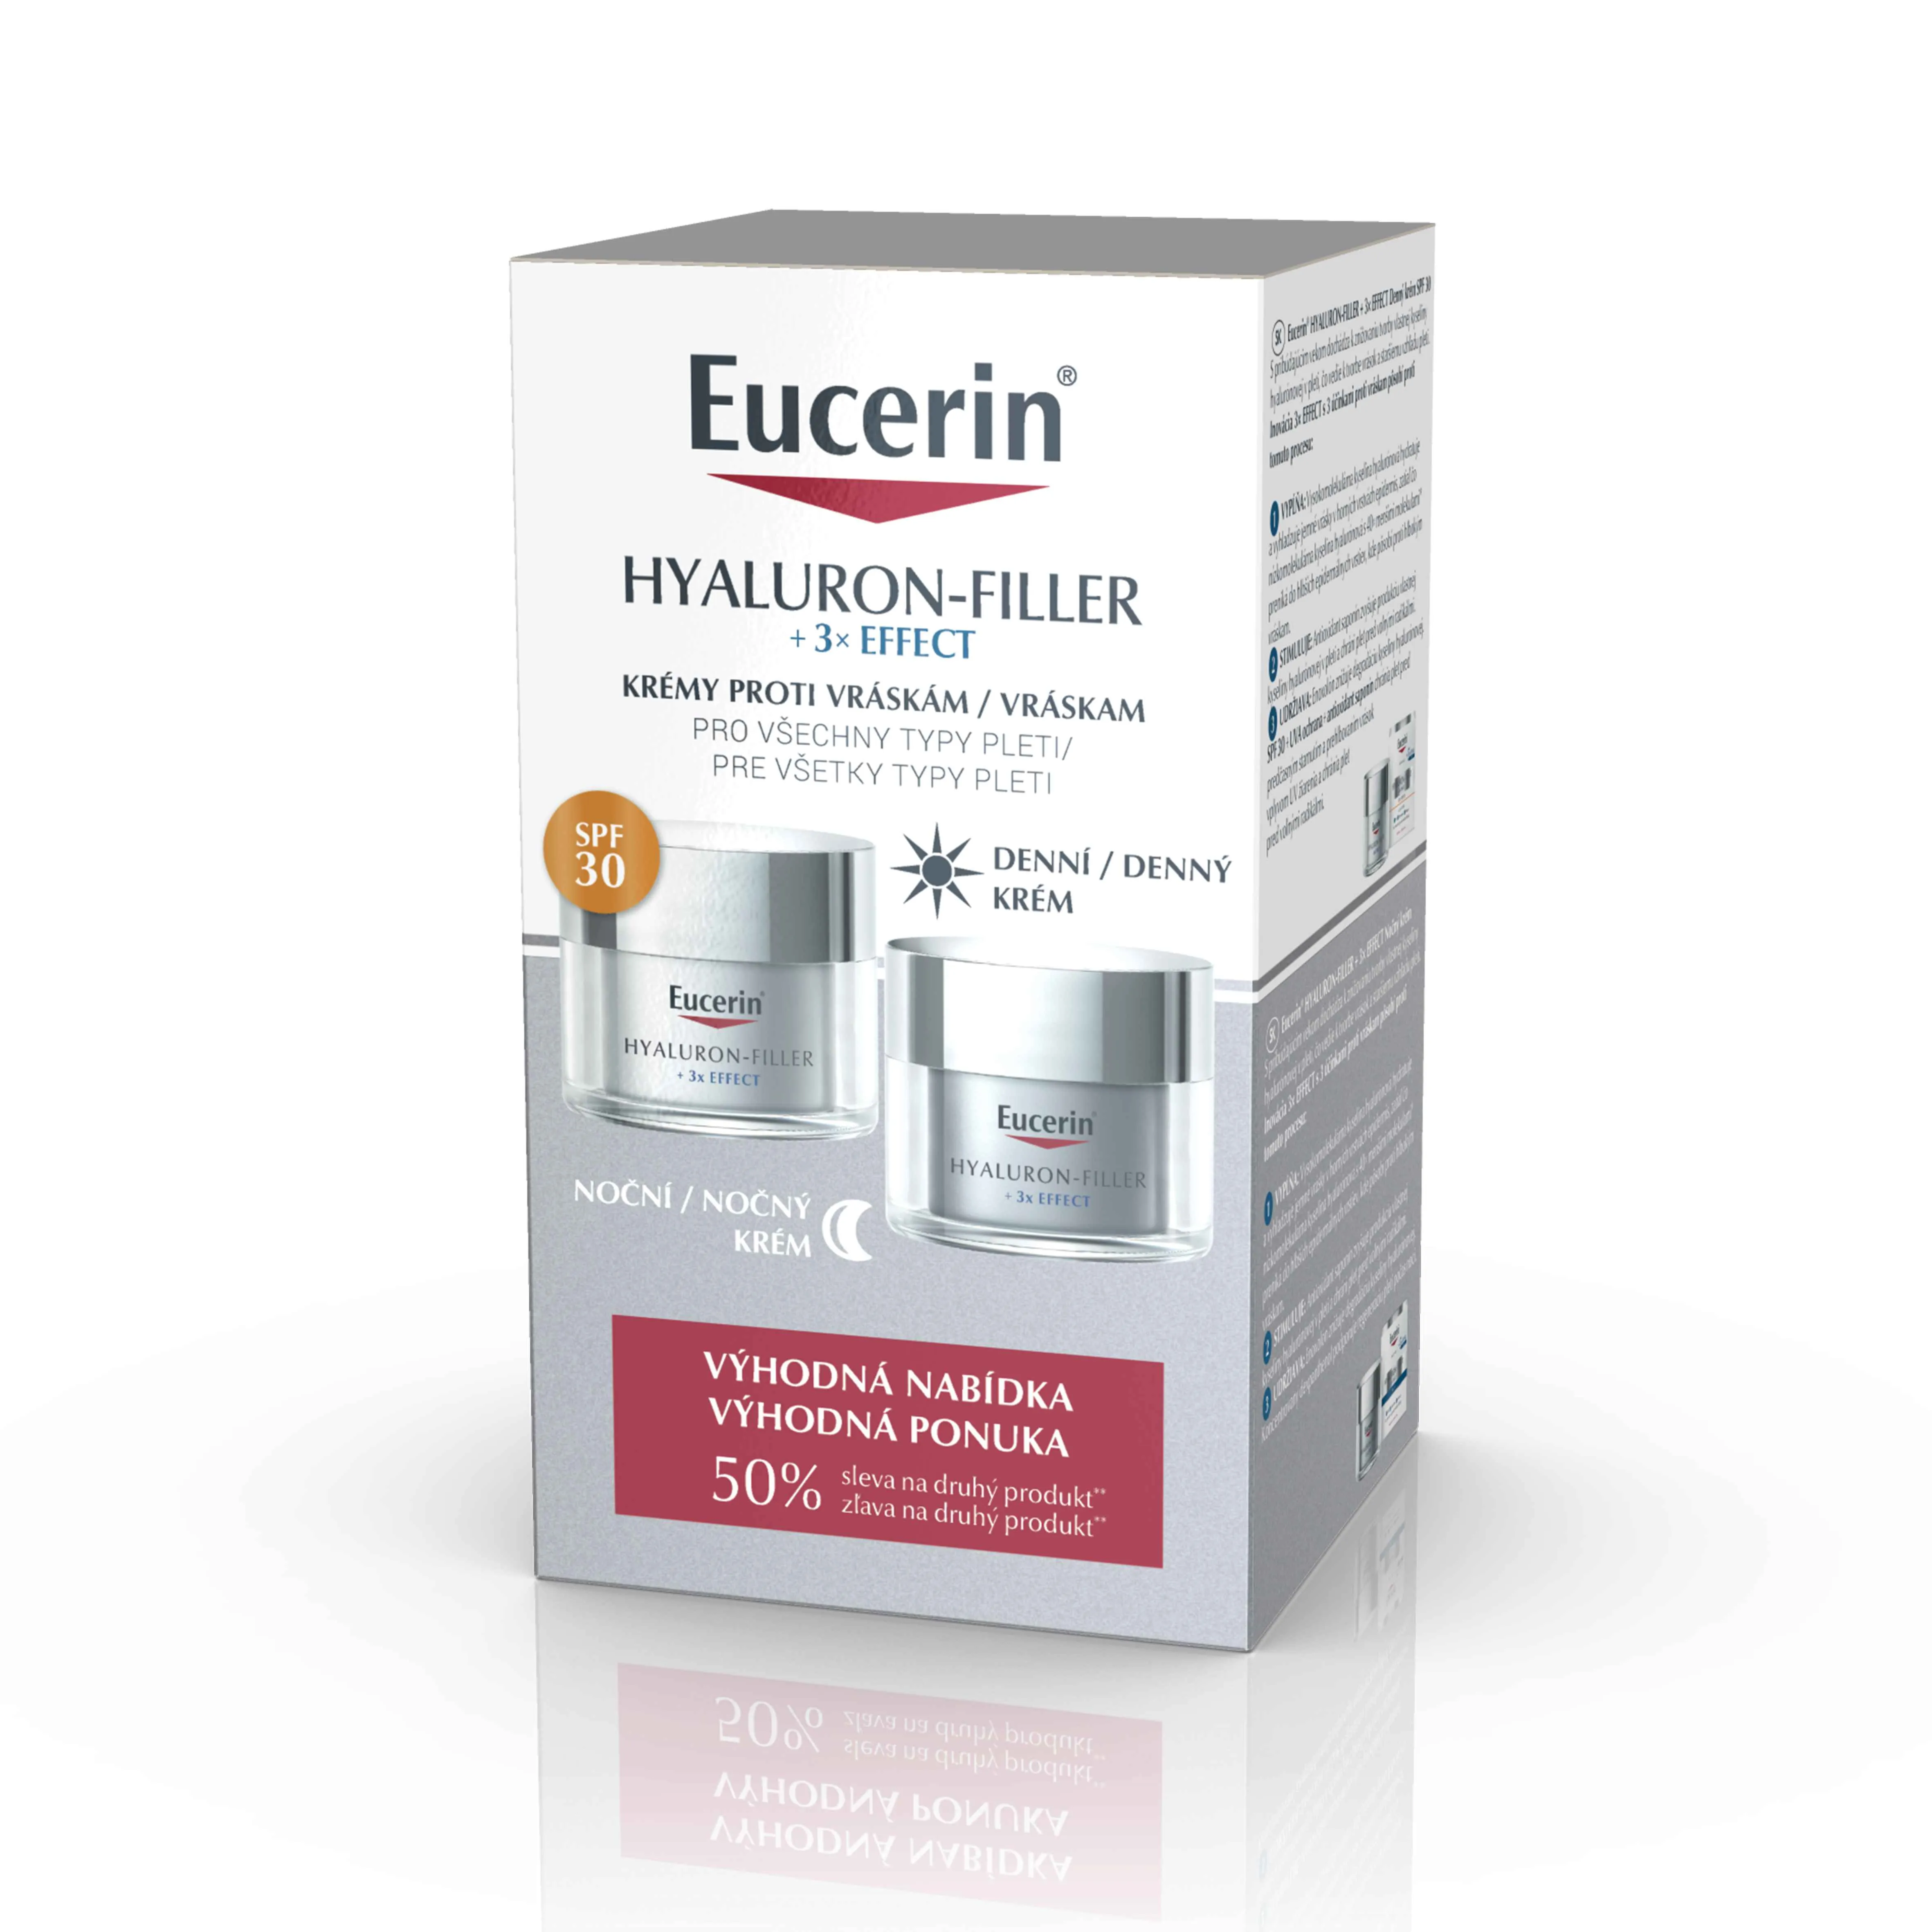 Eucerin HYALURON-FILLER + 3x EFFECT Denný krém SPF 30 + Nočný krém